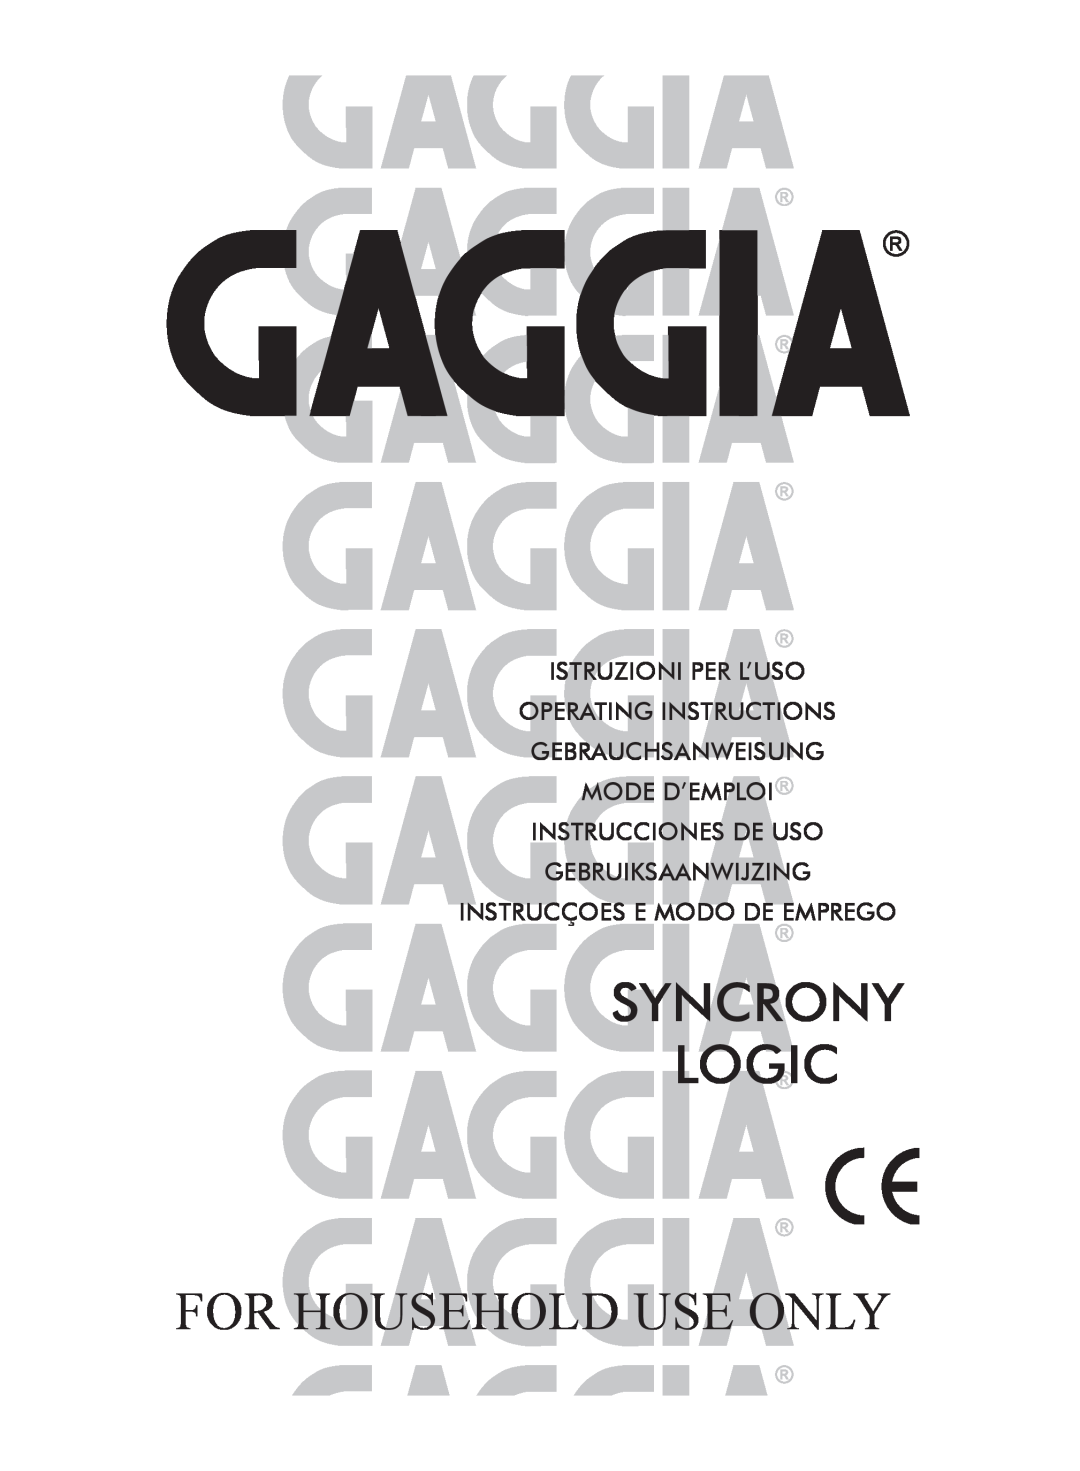 Gaggia 740903008 manual Istruzioni Per L’Uso Operating Instructions, Gebrauchsanweisung Mode D’Emploi, Syncrony Logic 